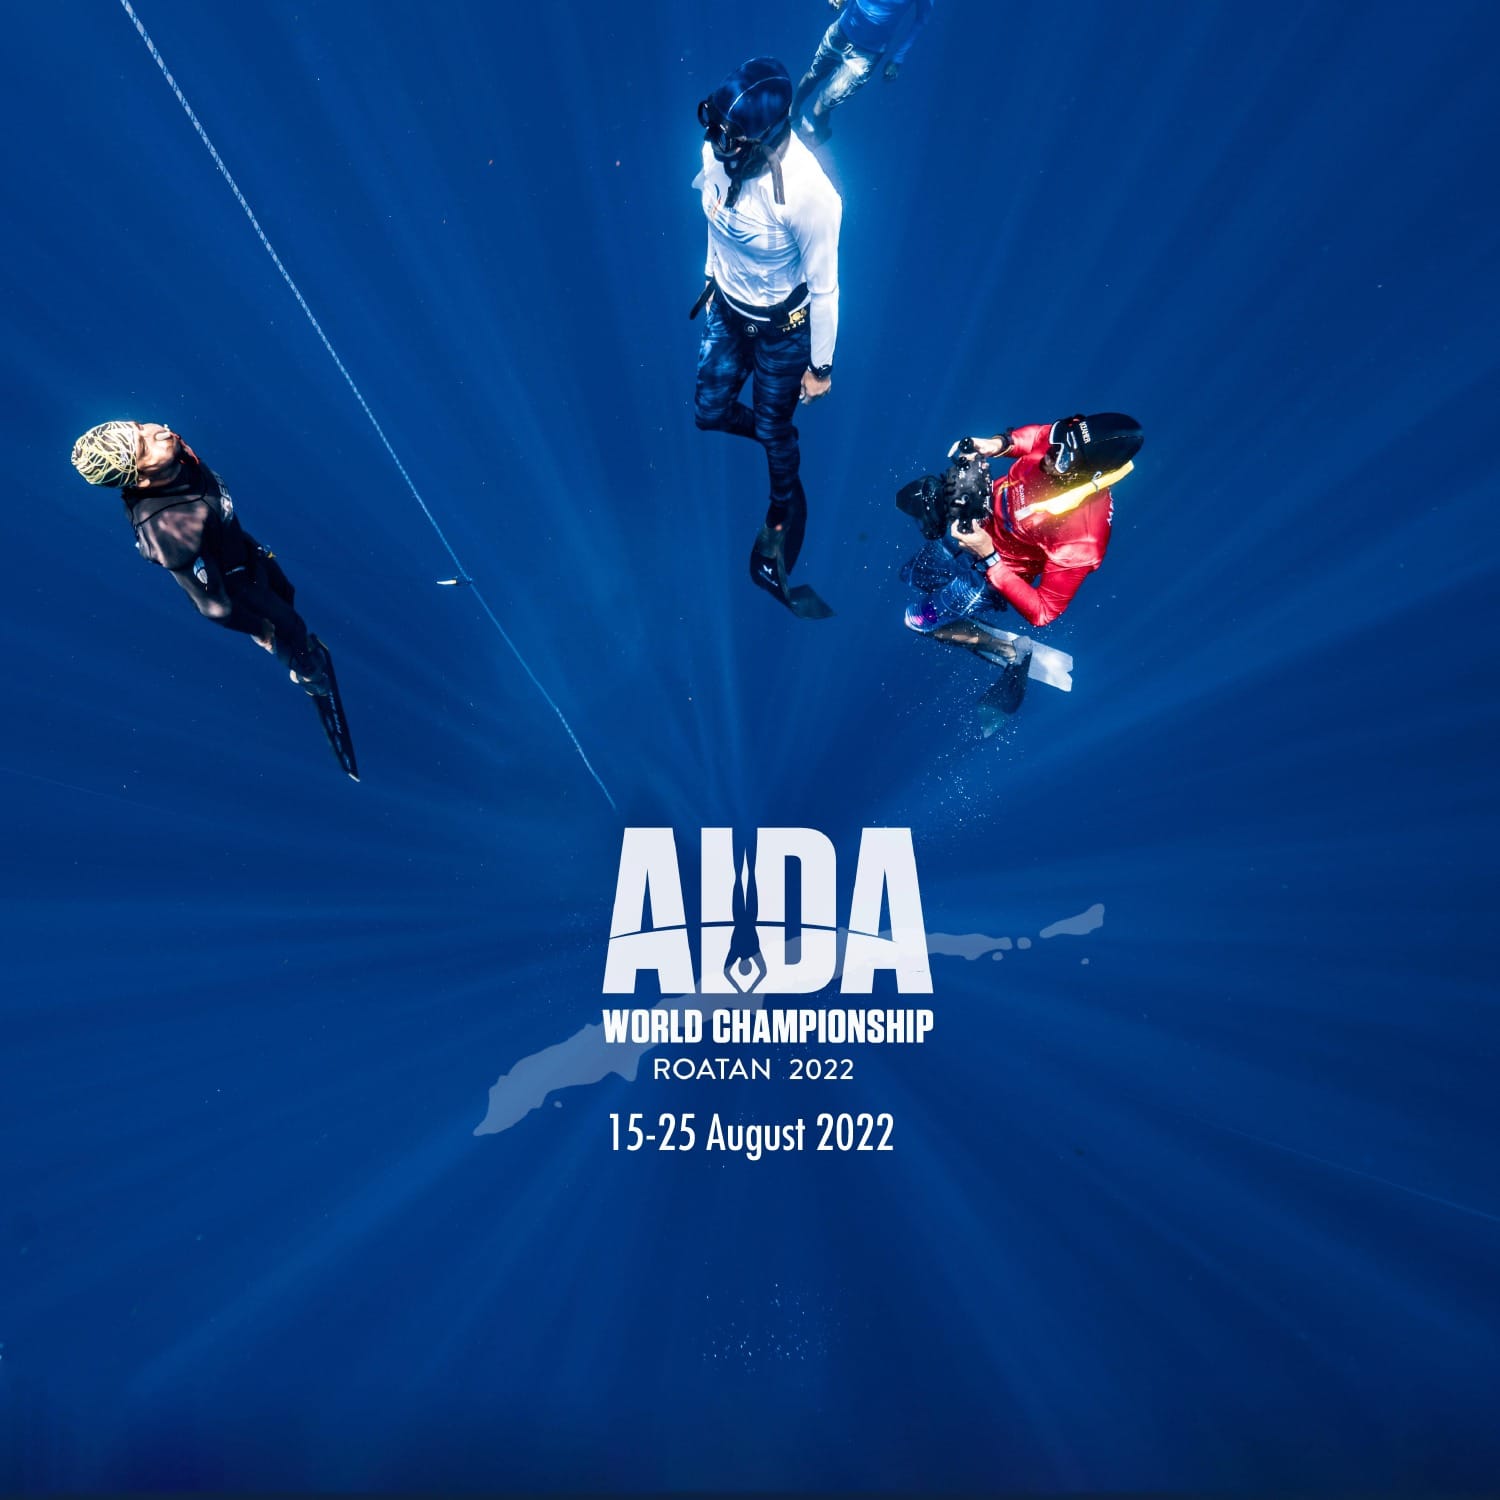 aida’s-2022-world-championship-dates-announcement-brings-controversy